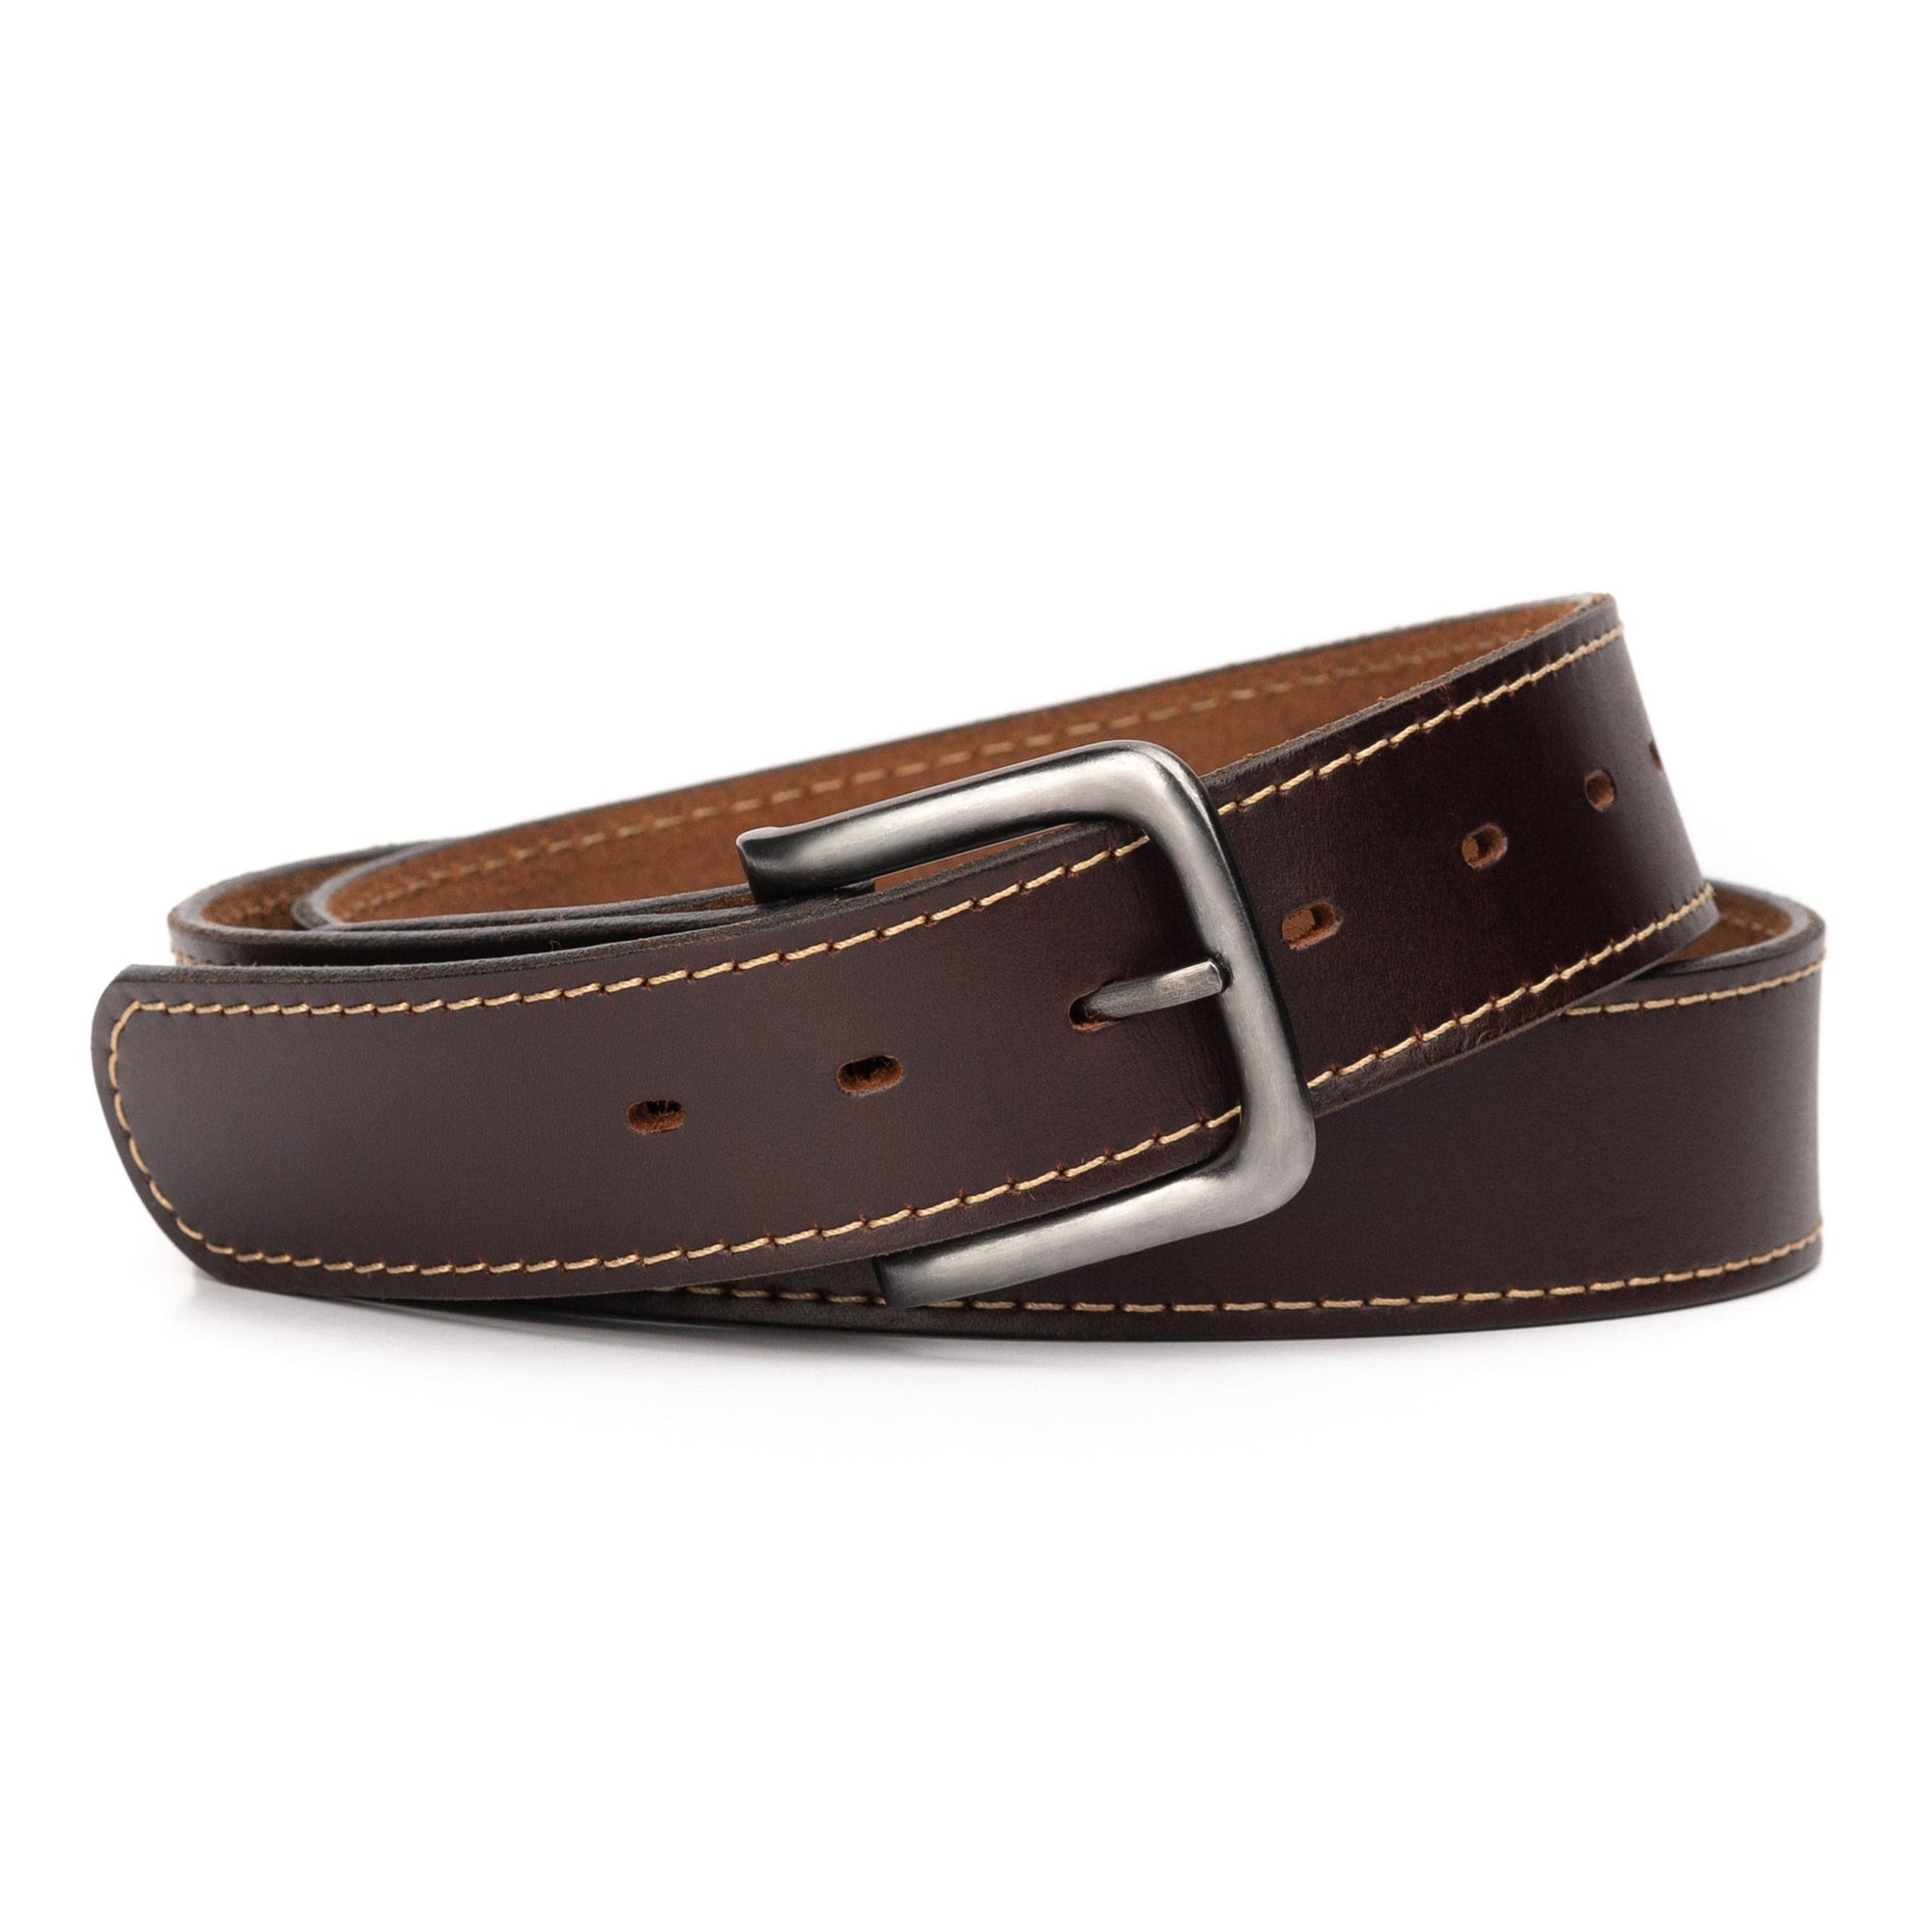 Main Street Forge Belt Pant Size 30 (Belt Size 32) / Whiskey Barrel Brown The Outrider Belt | Full Grain Tan Leather Belt for Men | Made in USA